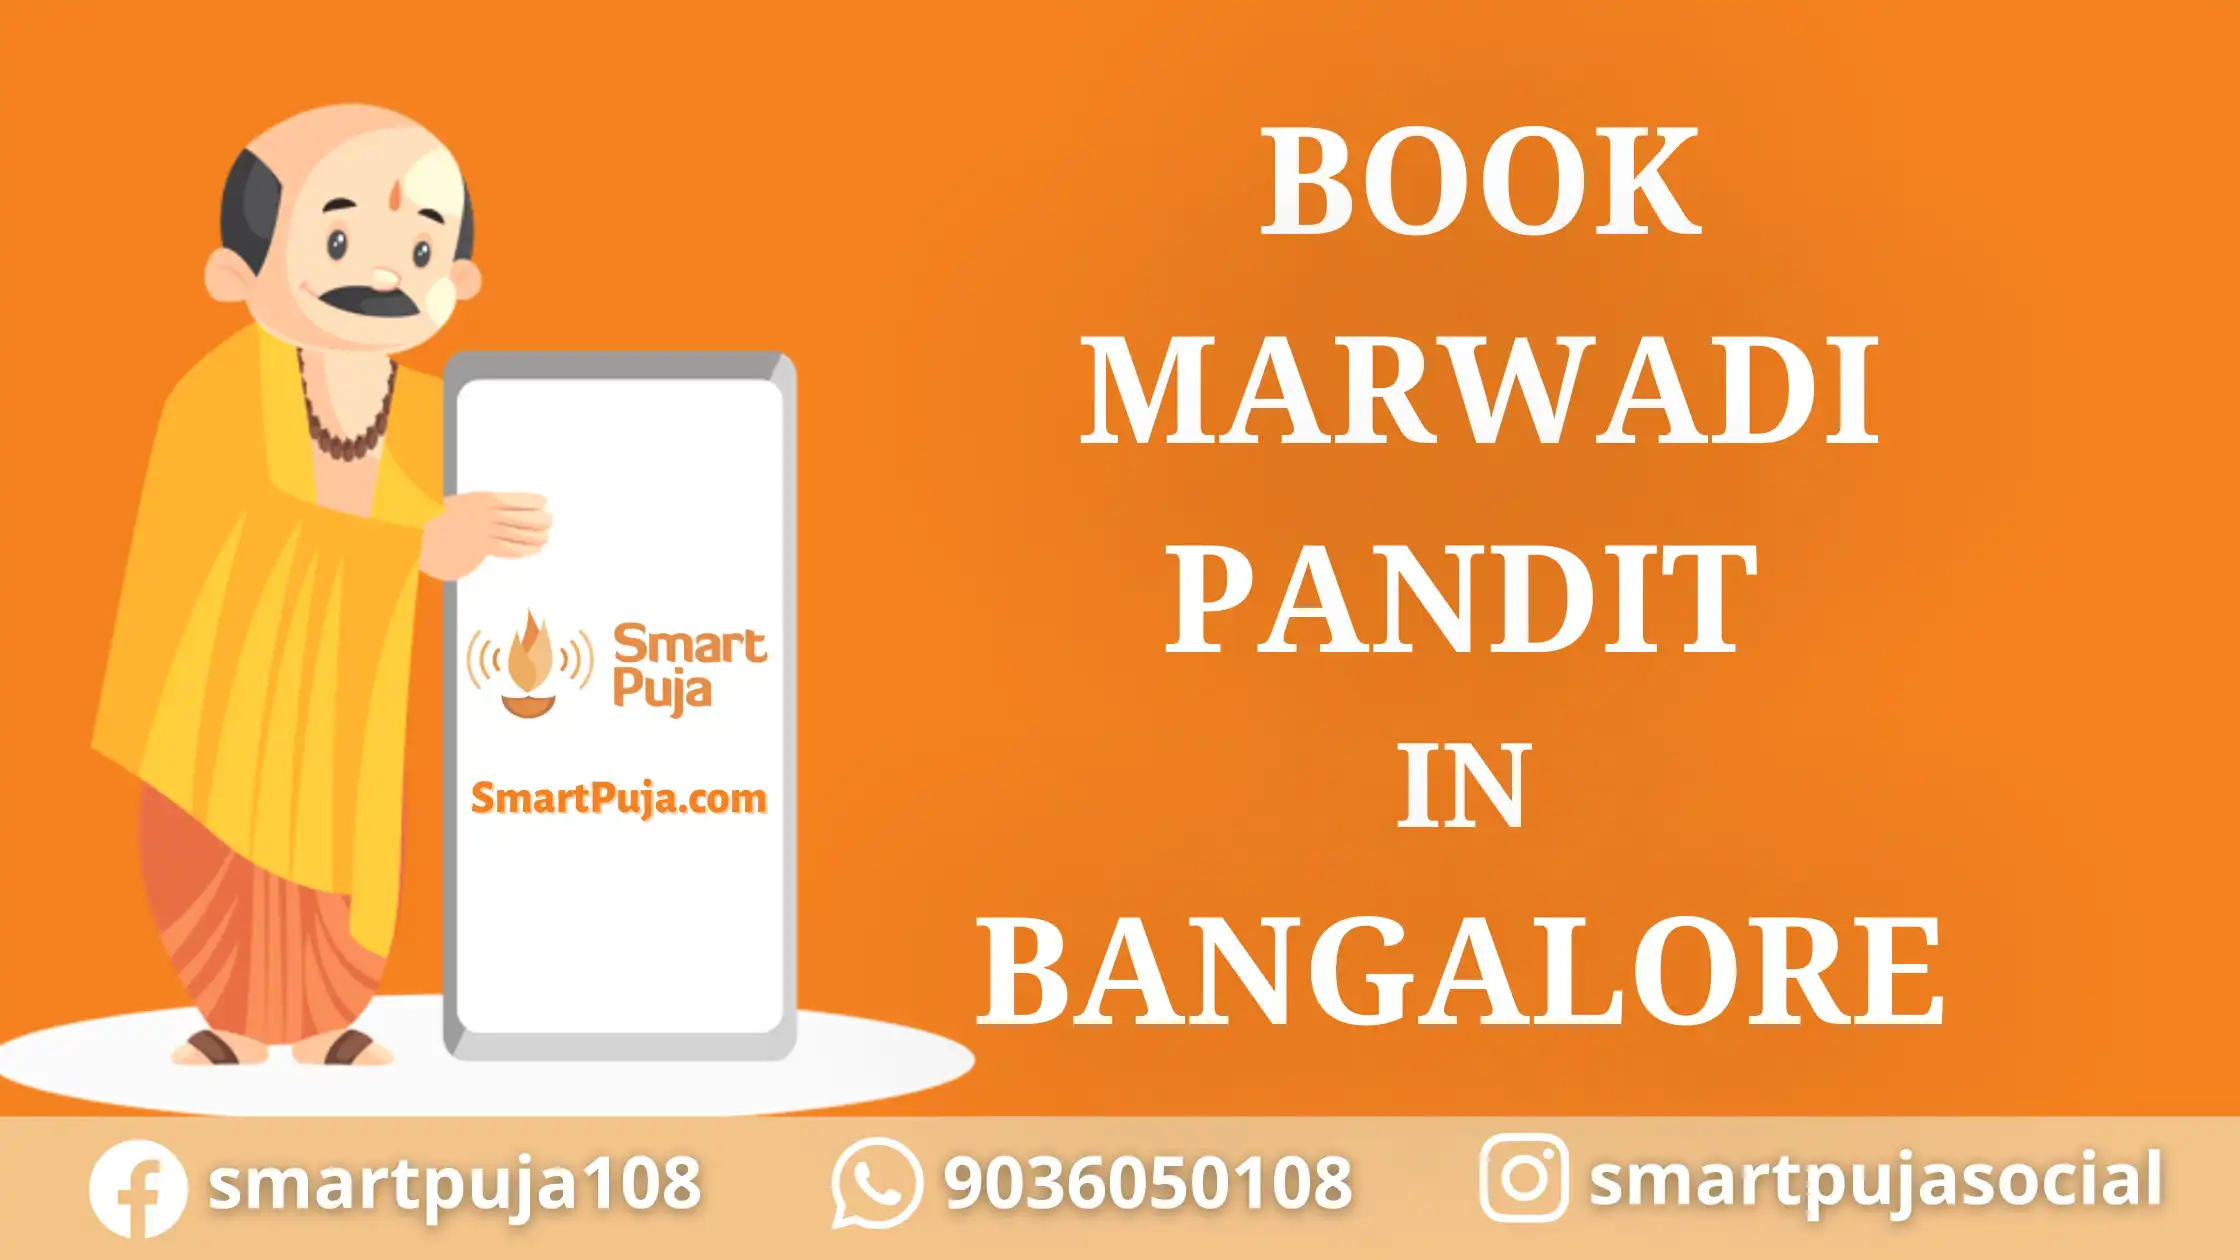 Book Marwadi Pandit in Bangalore